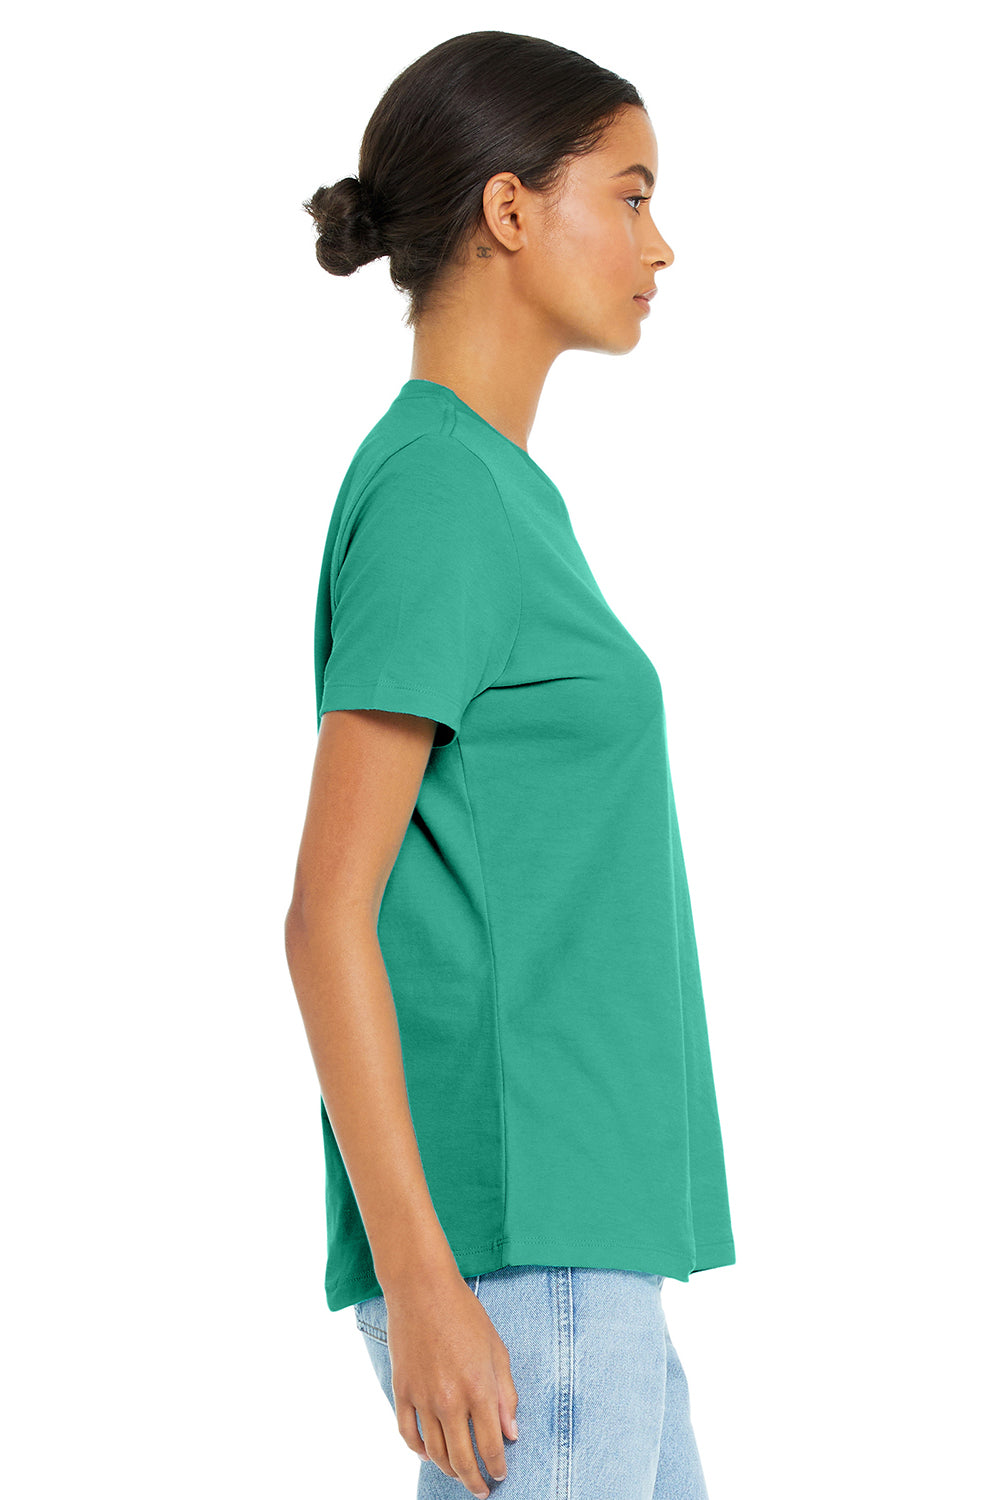 Bella + Canvas BC6400/B6400/6400 Womens Relaxed Jersey Short Sleeve Crewneck T-Shirt Teal Green Model Side